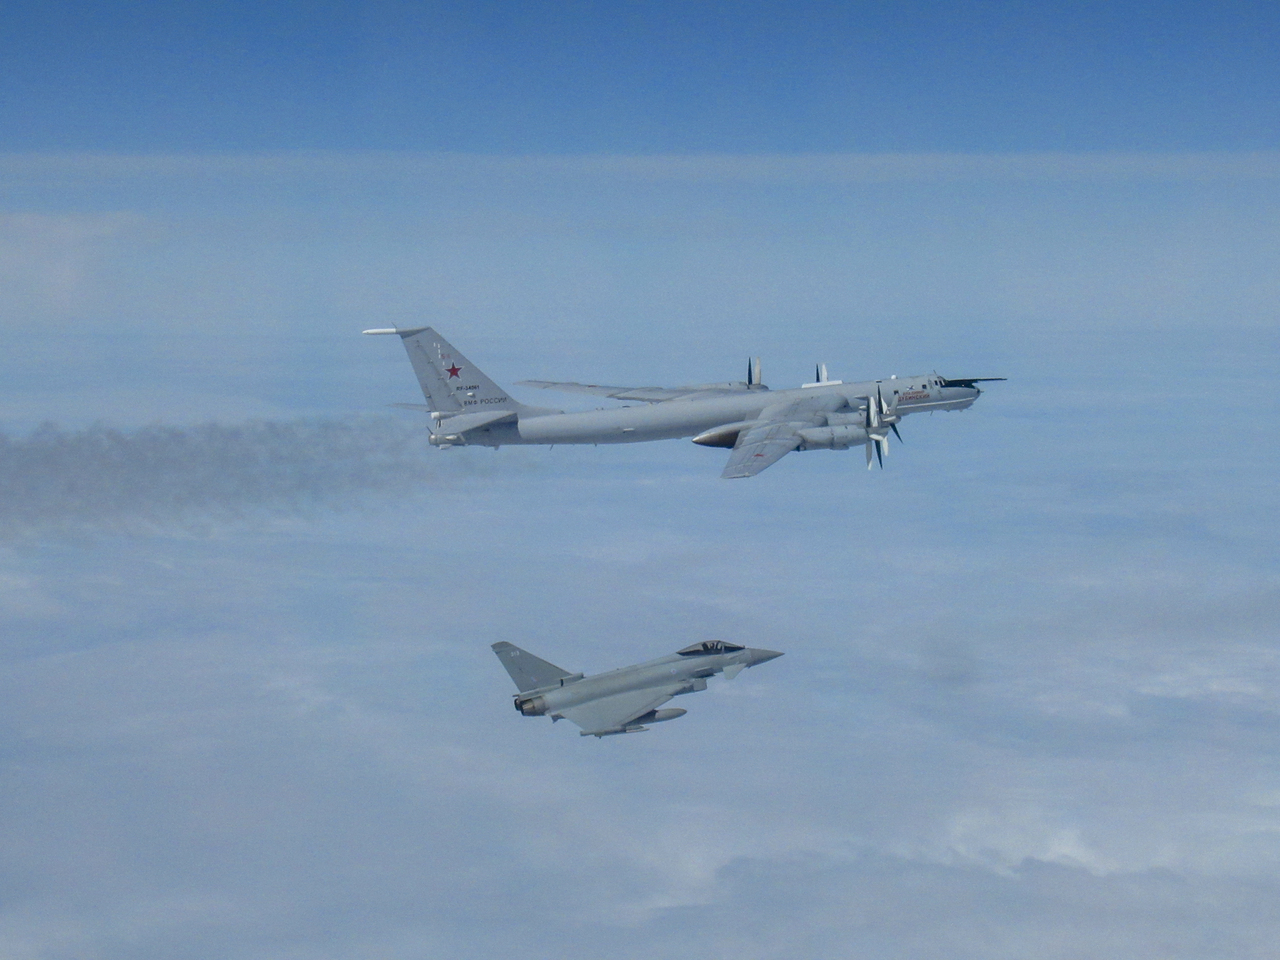 A RAF Typohhon escorts a Russian Tu-142 surveillance aircraft.